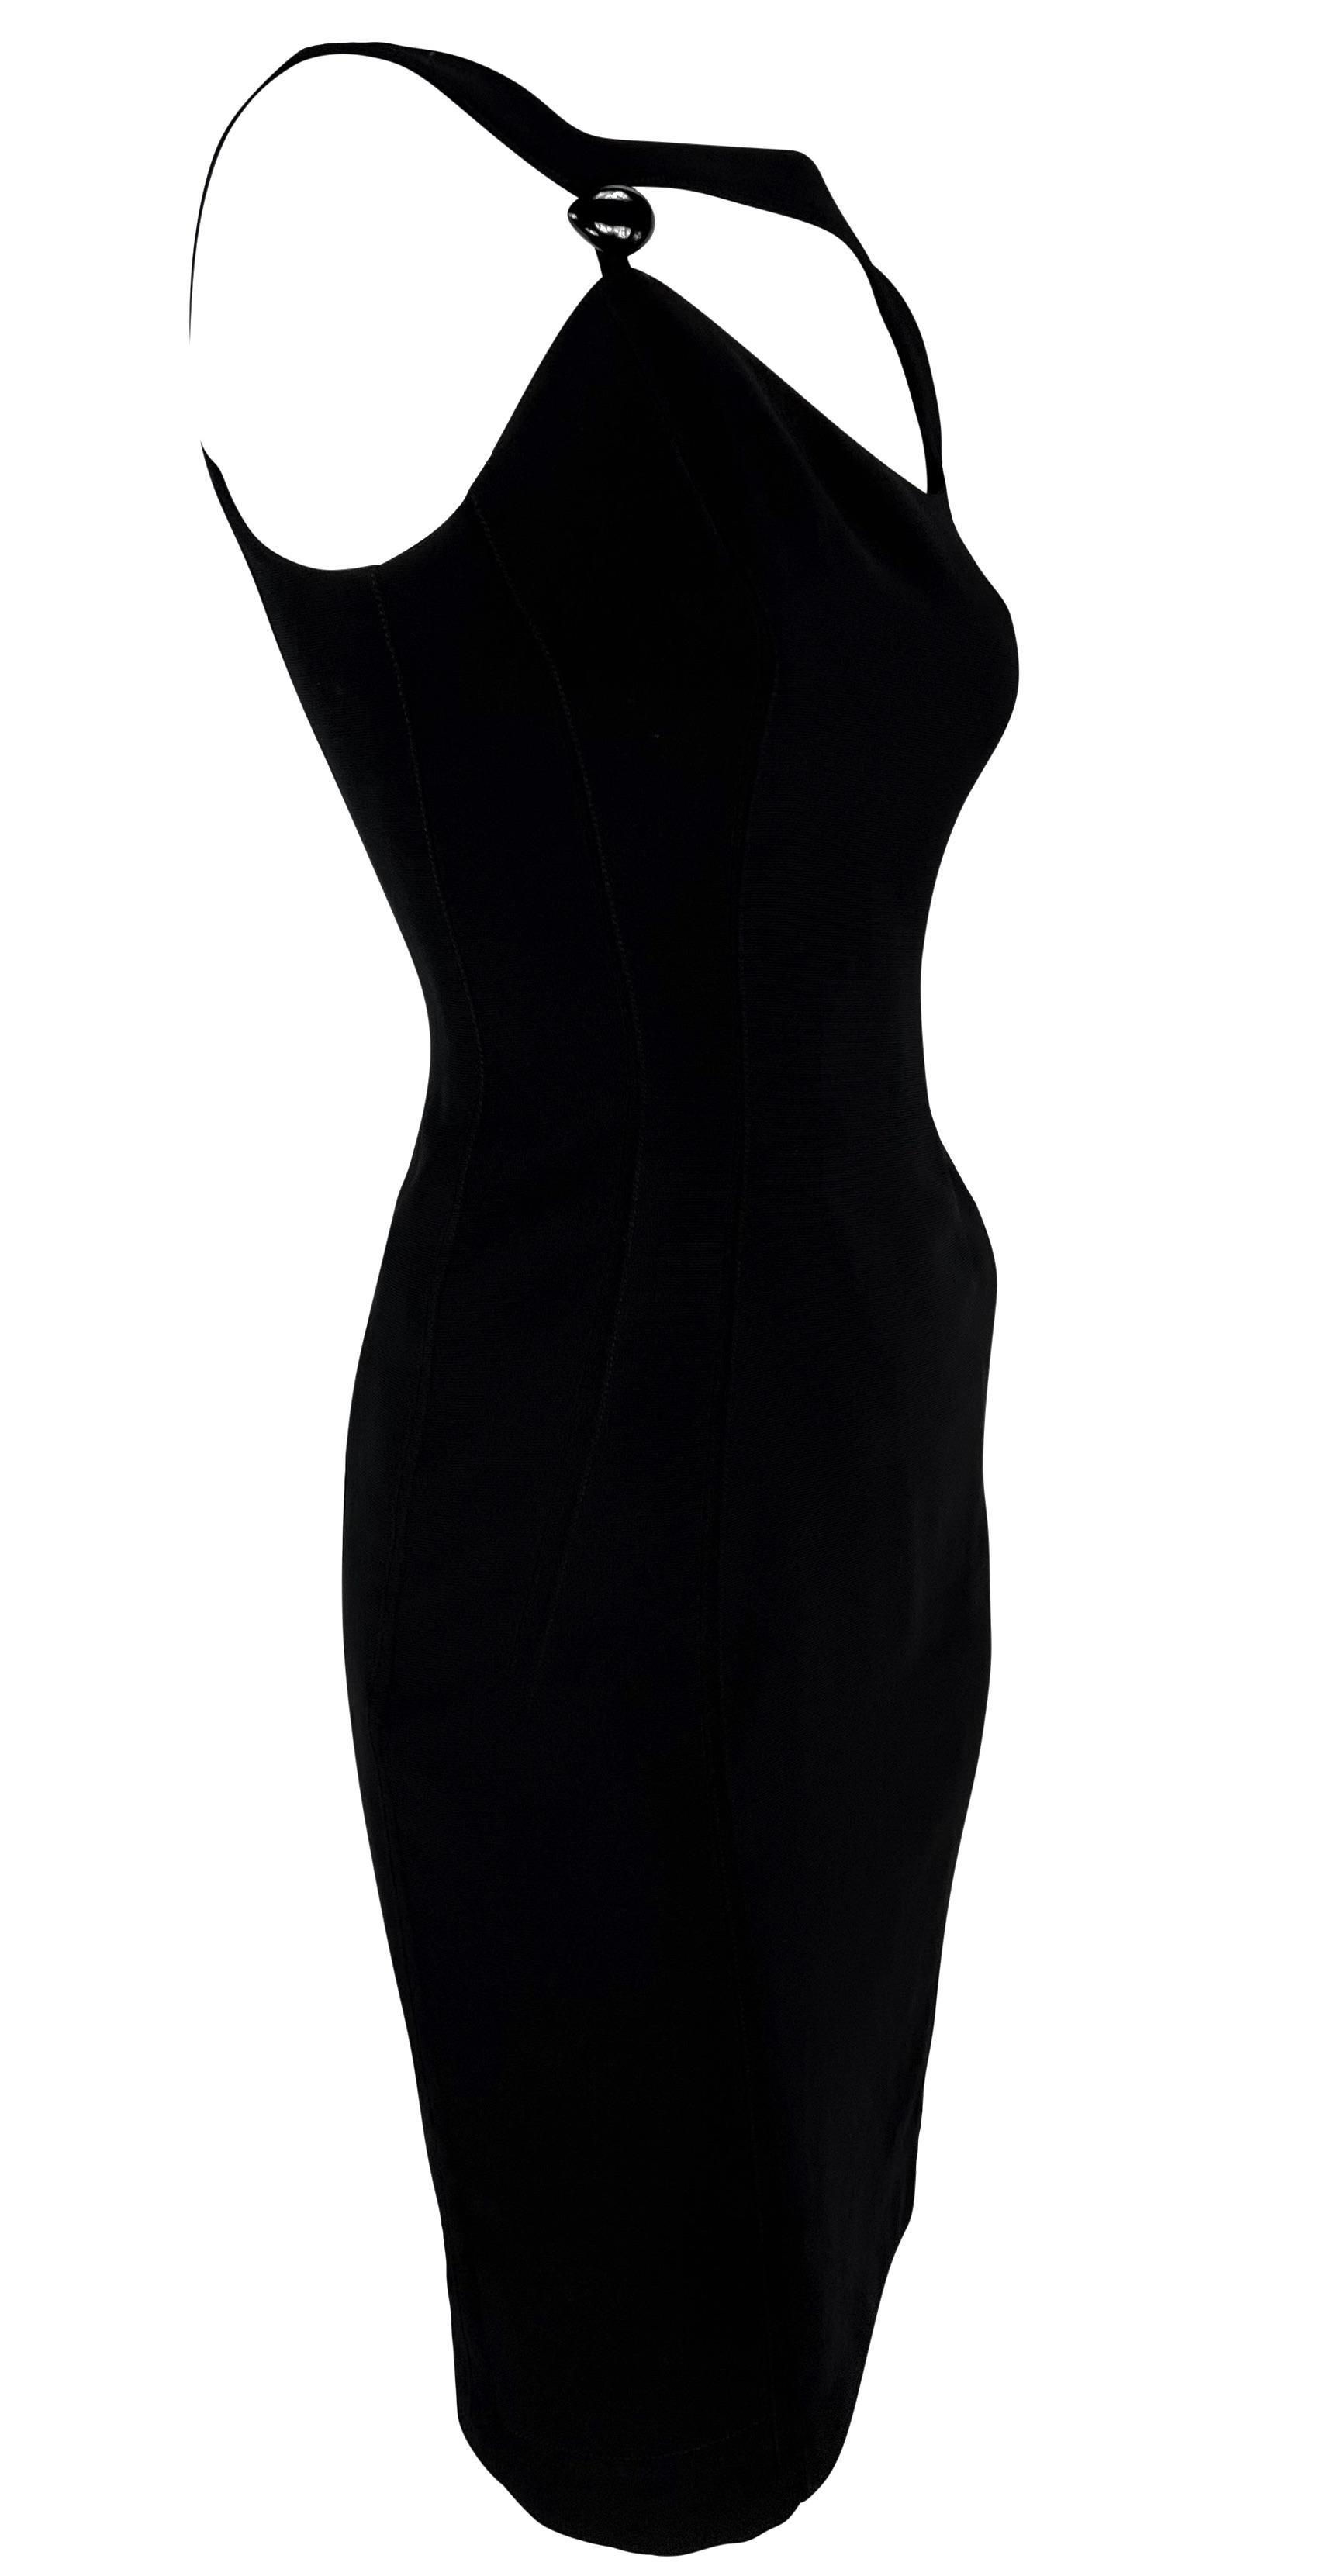 S/S 1999 Thierry Mugler Runway Asymmetric Brooch Detail Black Pencil Dress For Sale 5